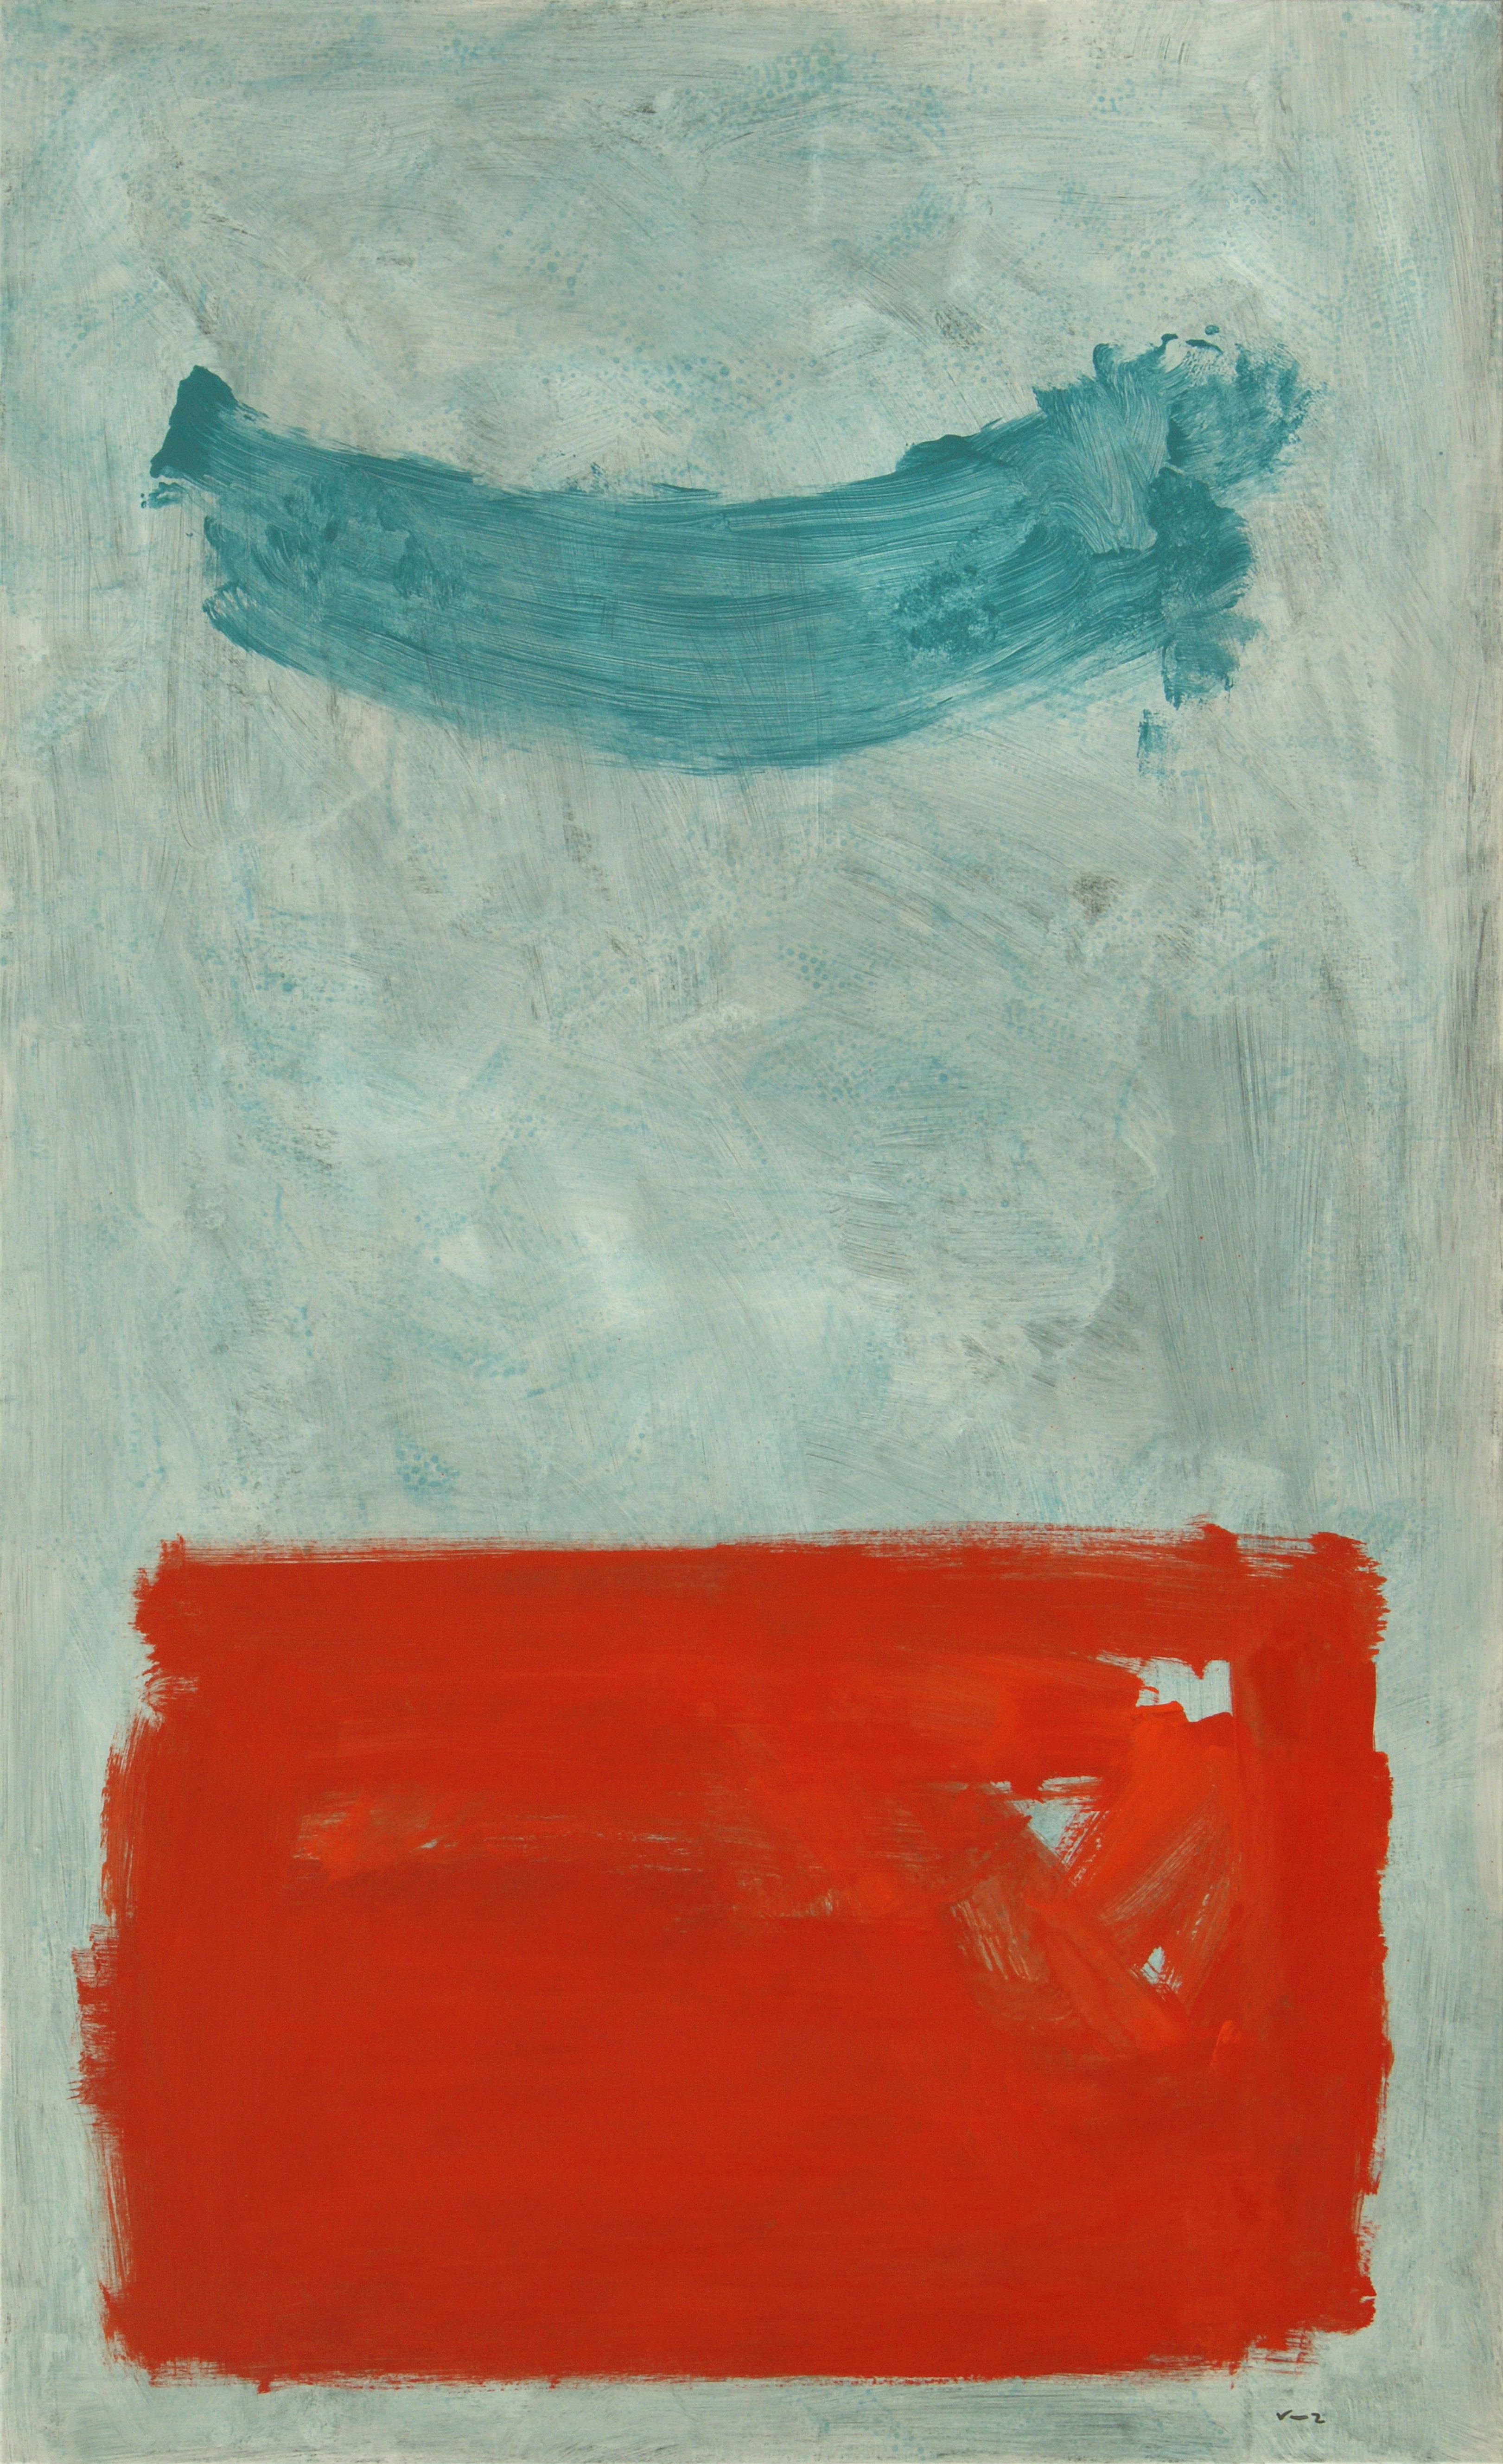 RAFAEL RUZ Abstract Painting - Ruz 31 Vertical  Big  Red  Green  Blue original abstract acrylic painting